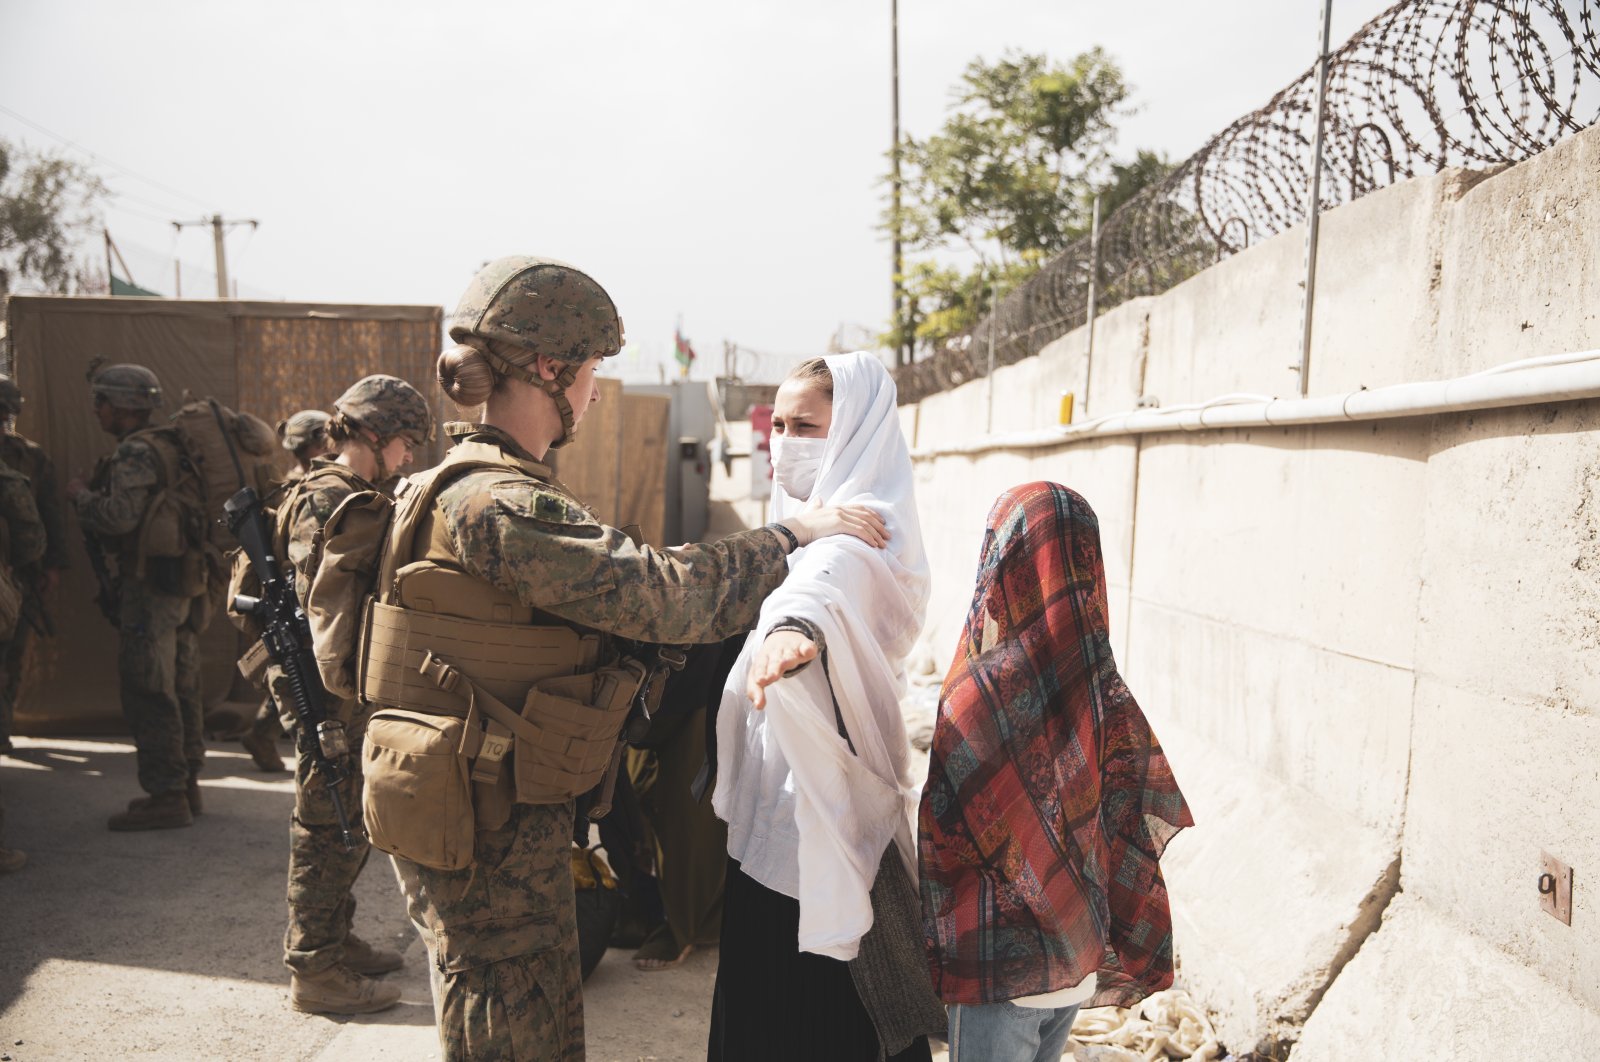 A Marine checks two civilians during processing through an Evacuee Control Checkpoint (ECC) during an evacuation at Hamid Karzai International Airport, Kabul, Afghanistan, Aug. 18, 2021. (U.S. Marine Corps photo via EPA)